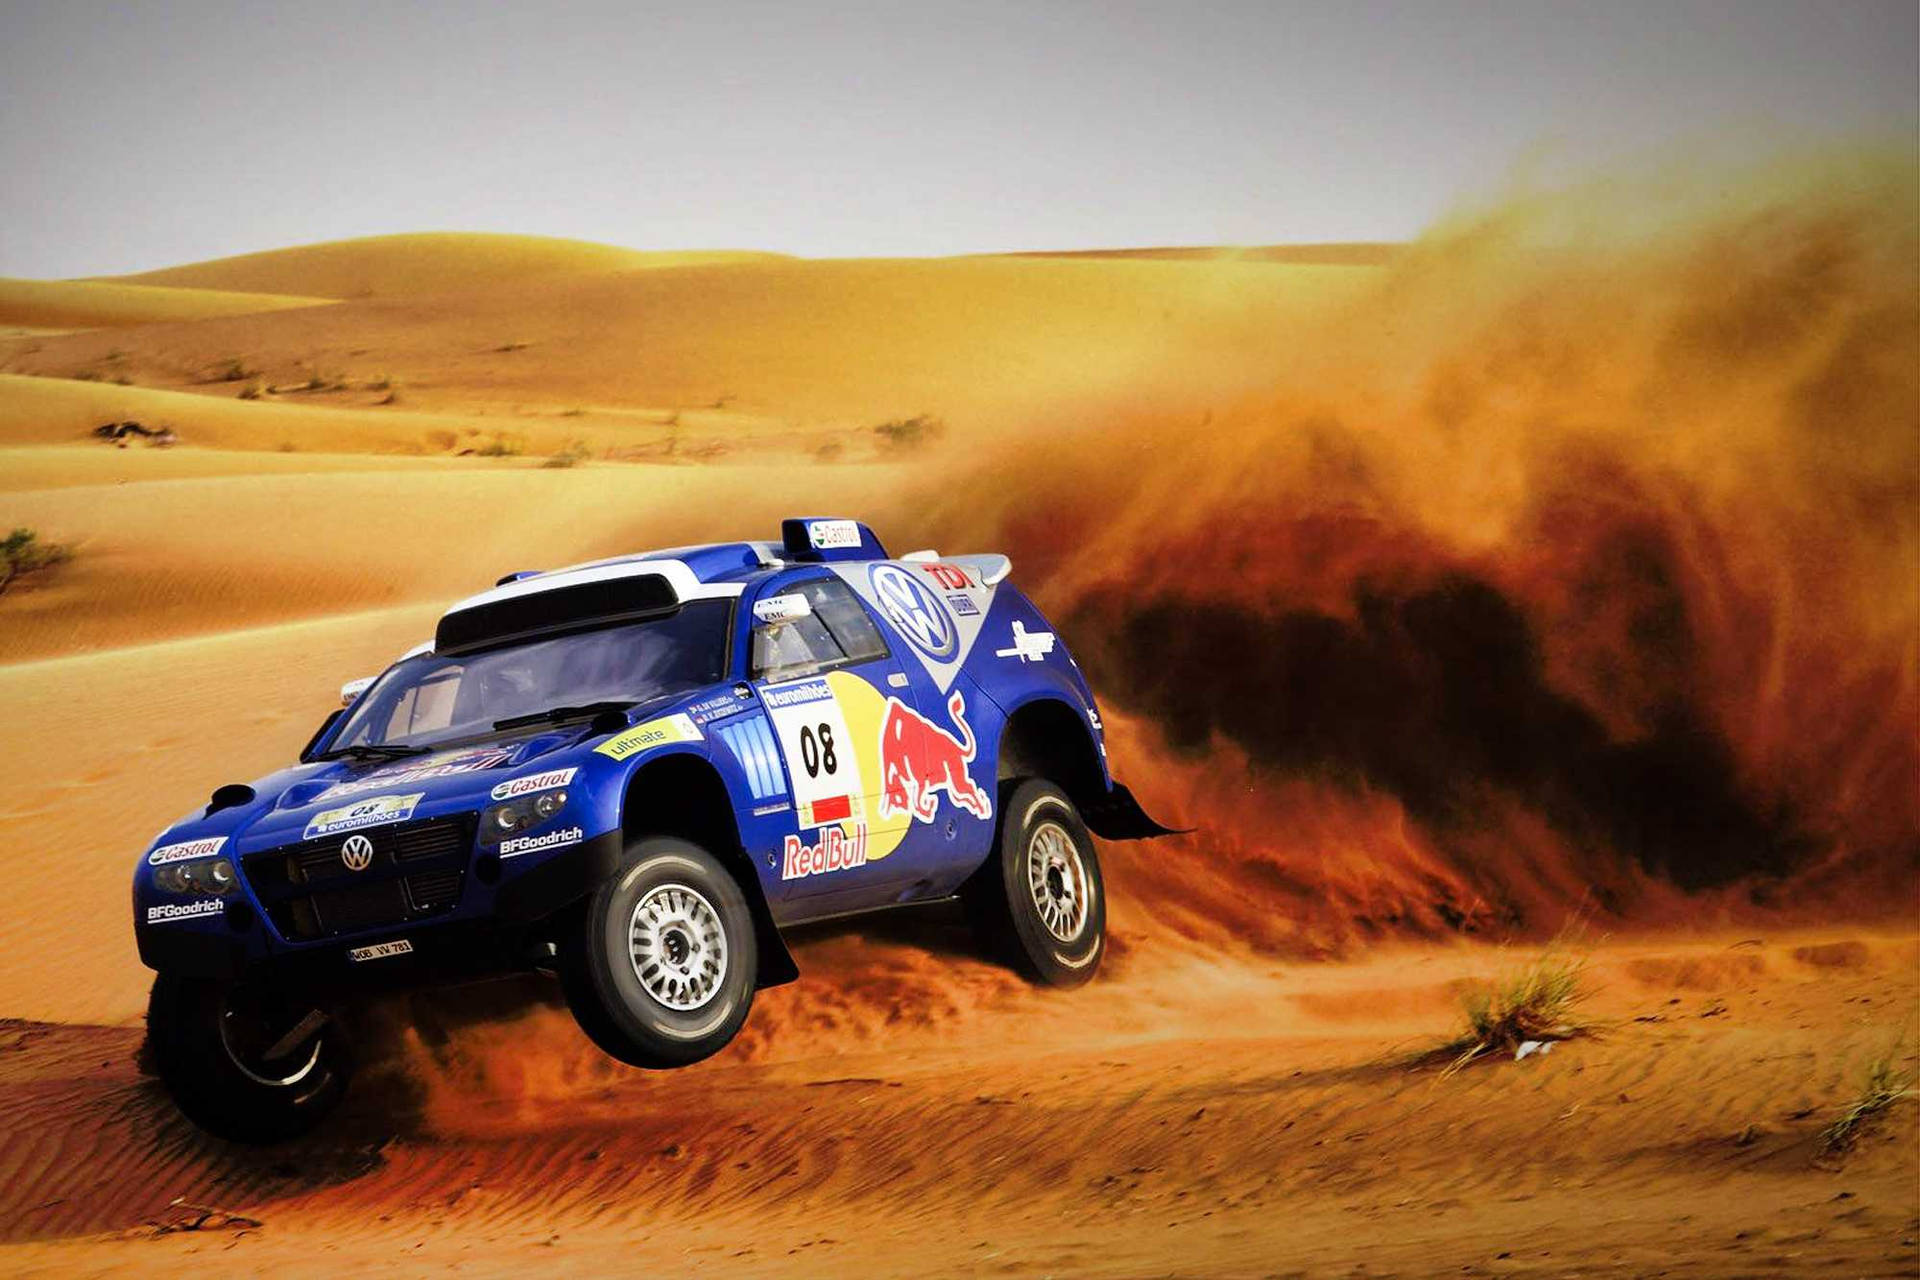 2008 Volkswagen Touareg Dakar Rally